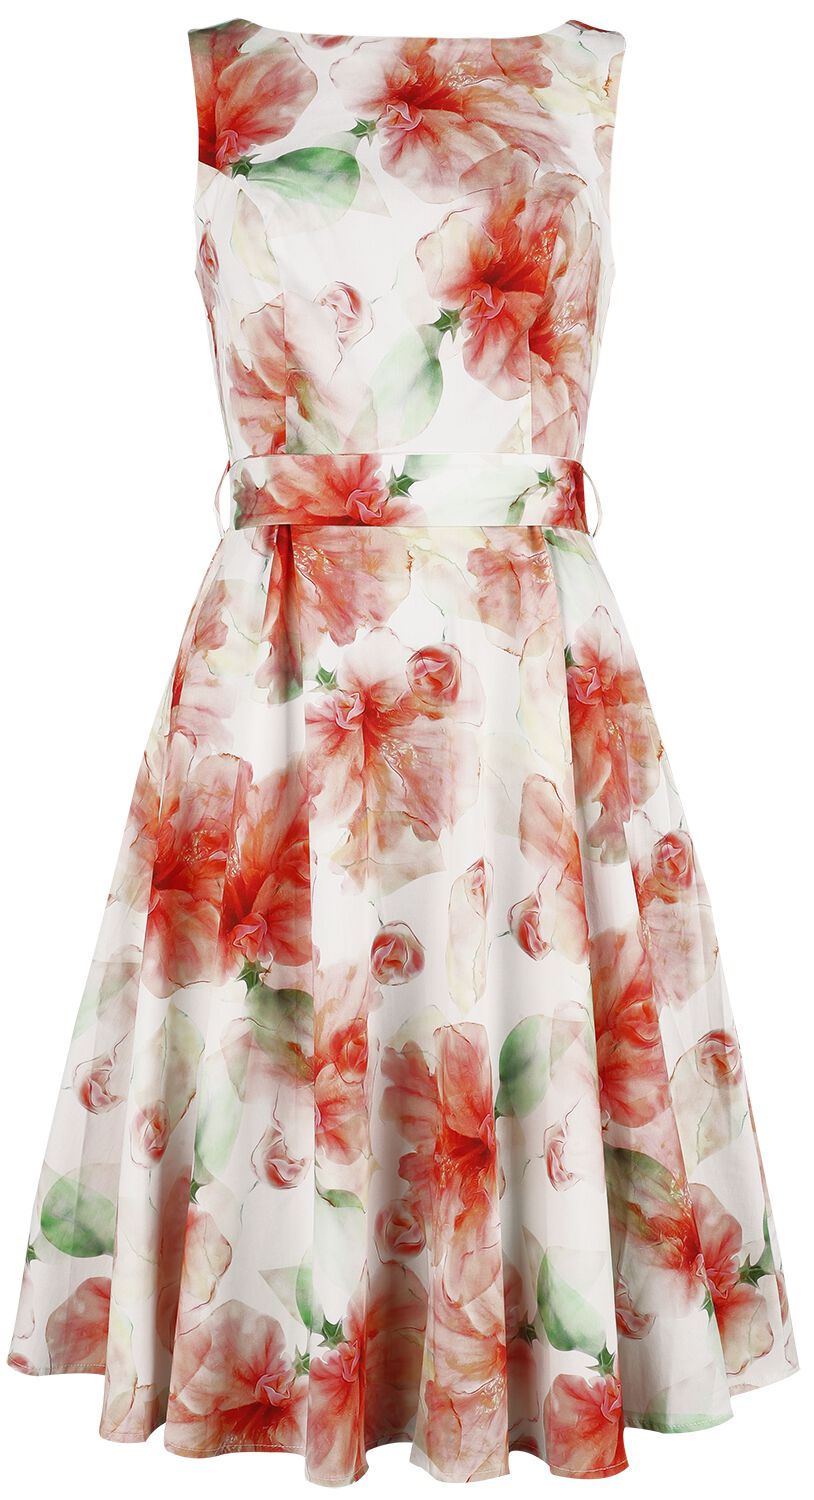 H&R London - Rockabilly Kleid knielang - Ayla Floral Swing Dress - XS bis 4XL - für Damen - Größe XS - multicolor